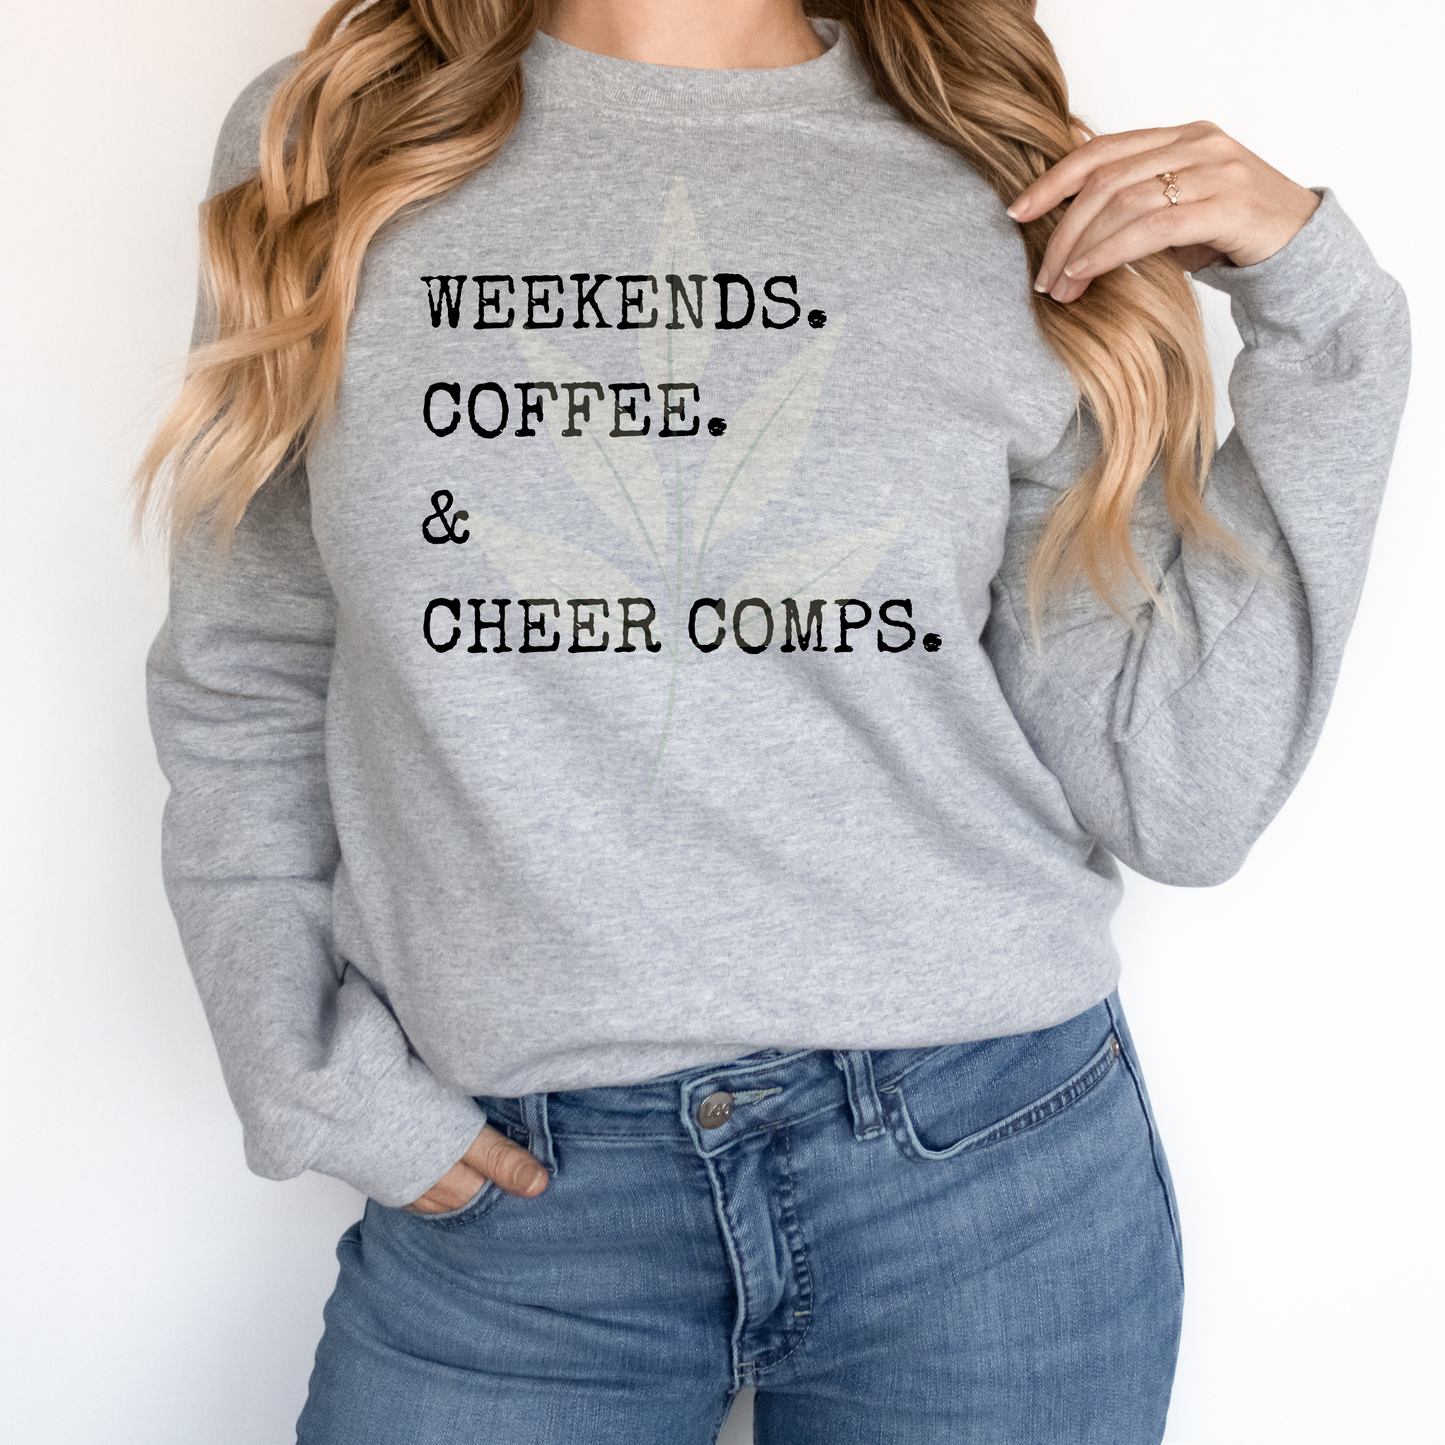 Weekends, Coffee & Sport